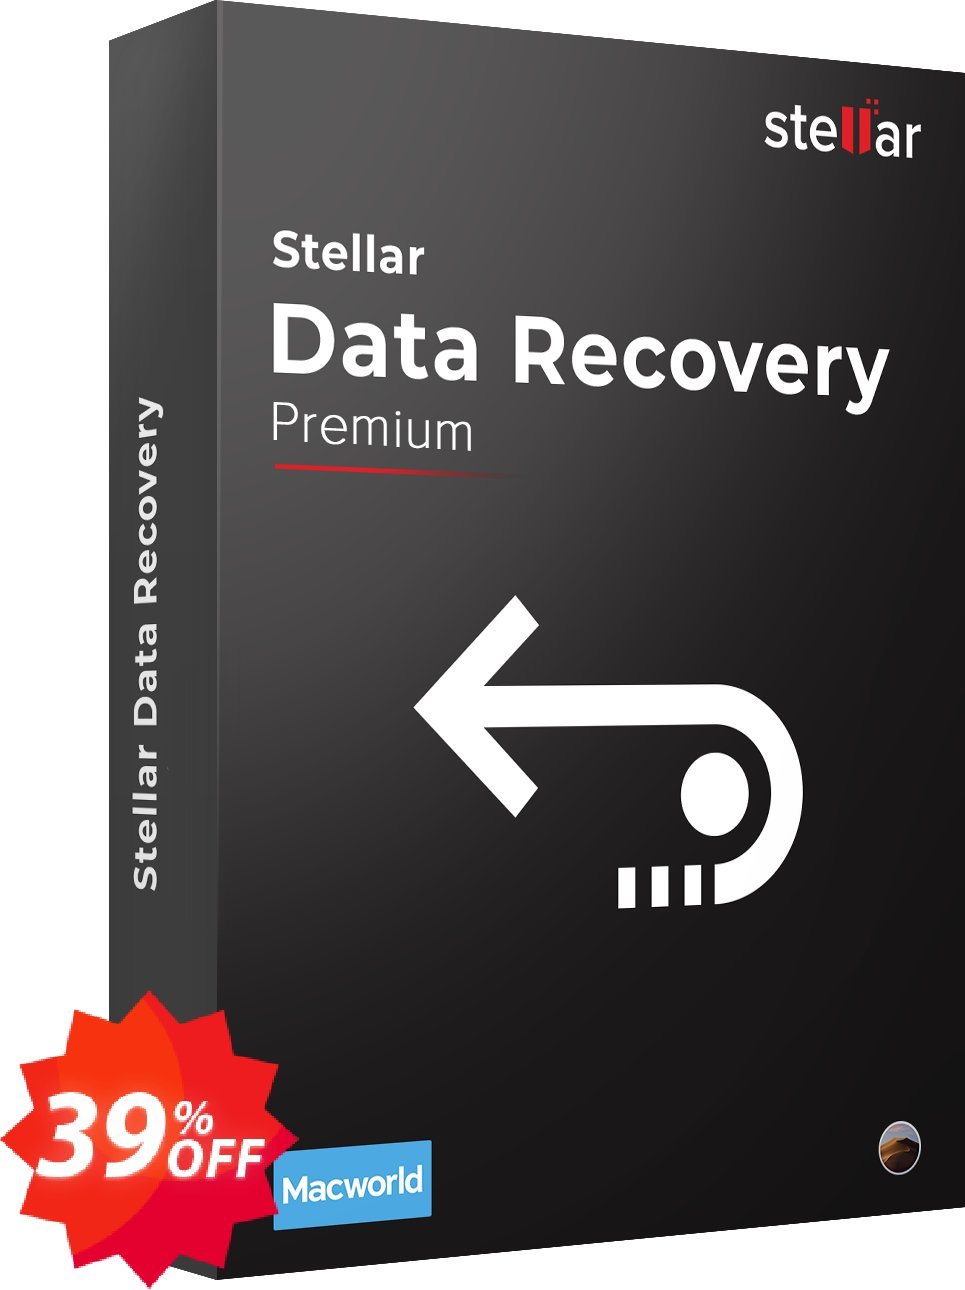 Stellar Data Recovery Premium for MAC, Lifetime Plan  Coupon code 39% discount 